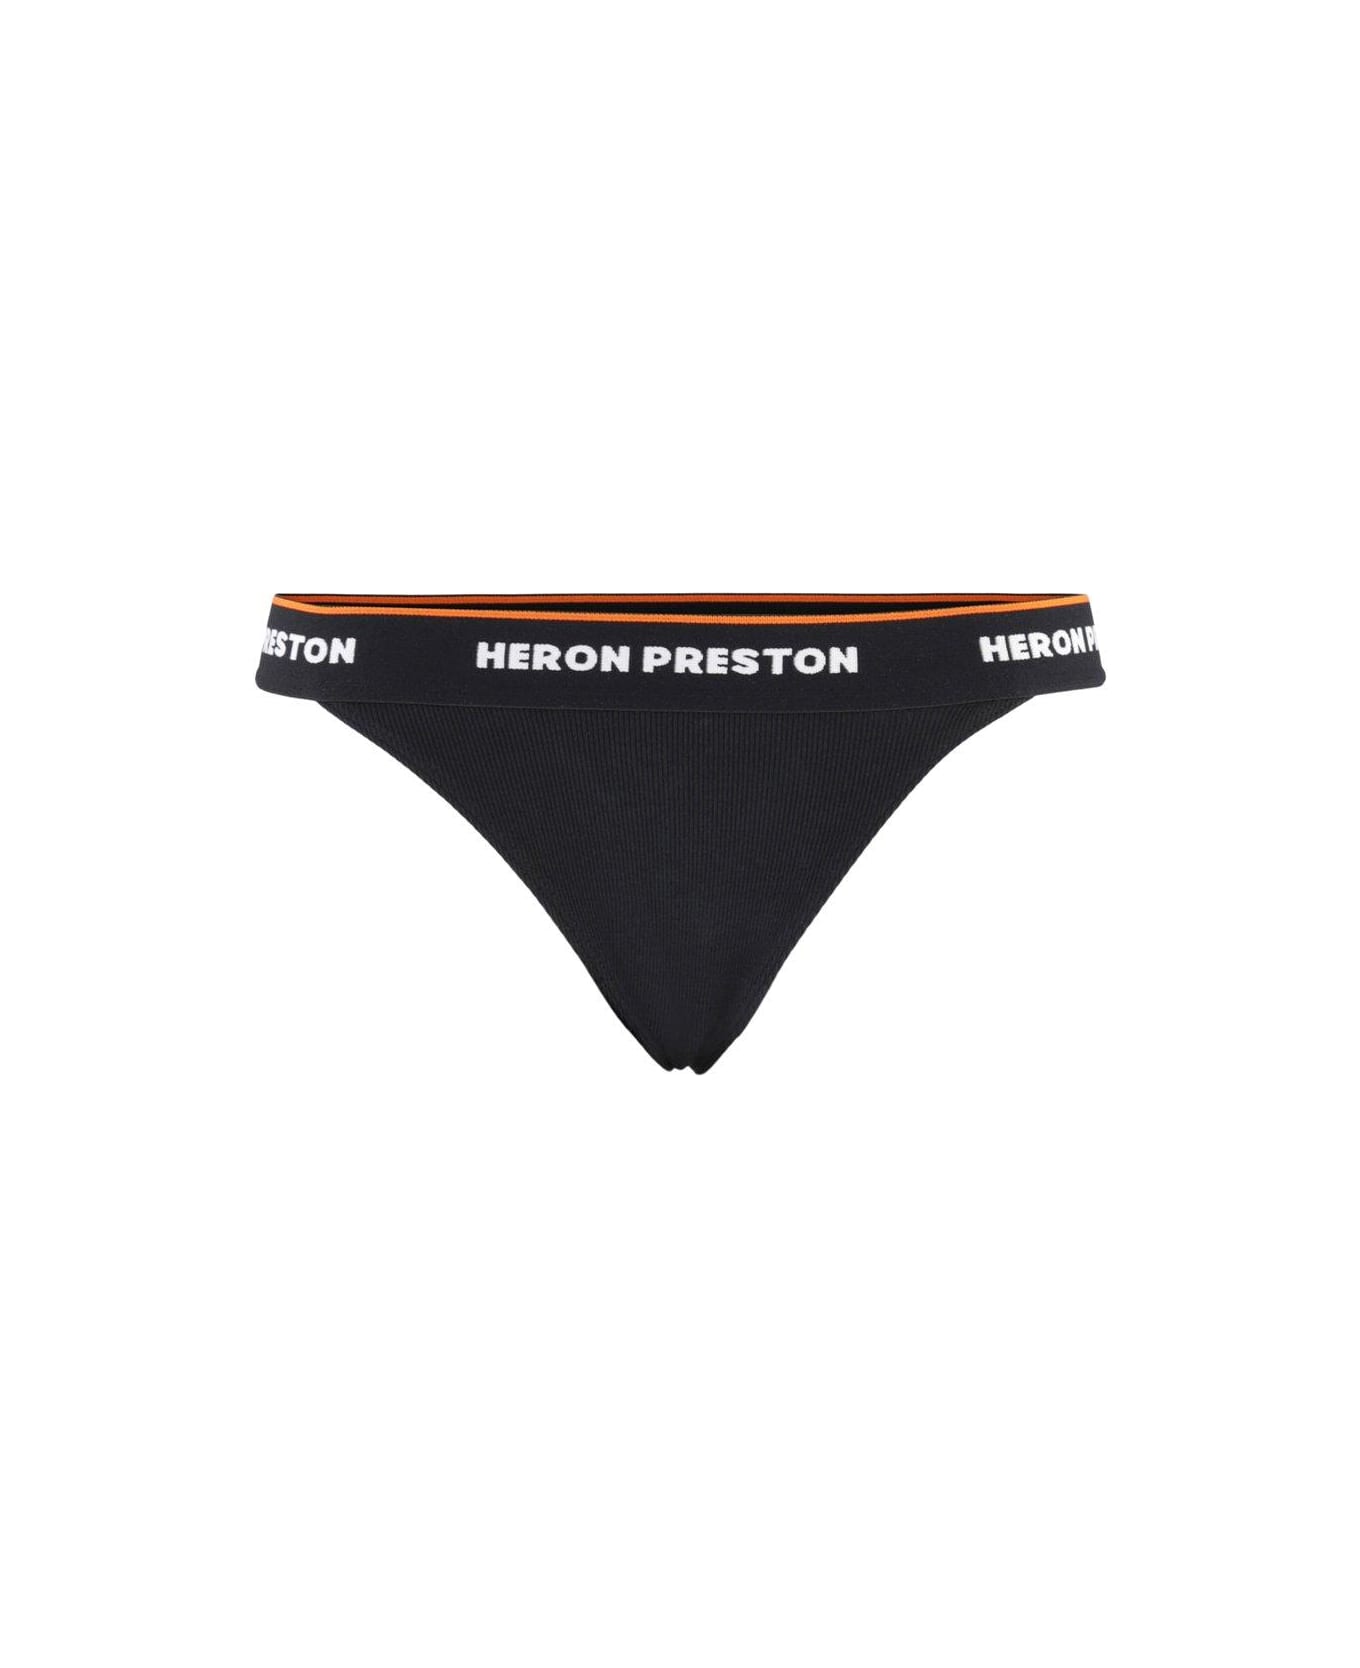 HERON PRESTON 'thong Logo' Cotton Briefs - BLACK ショーツ